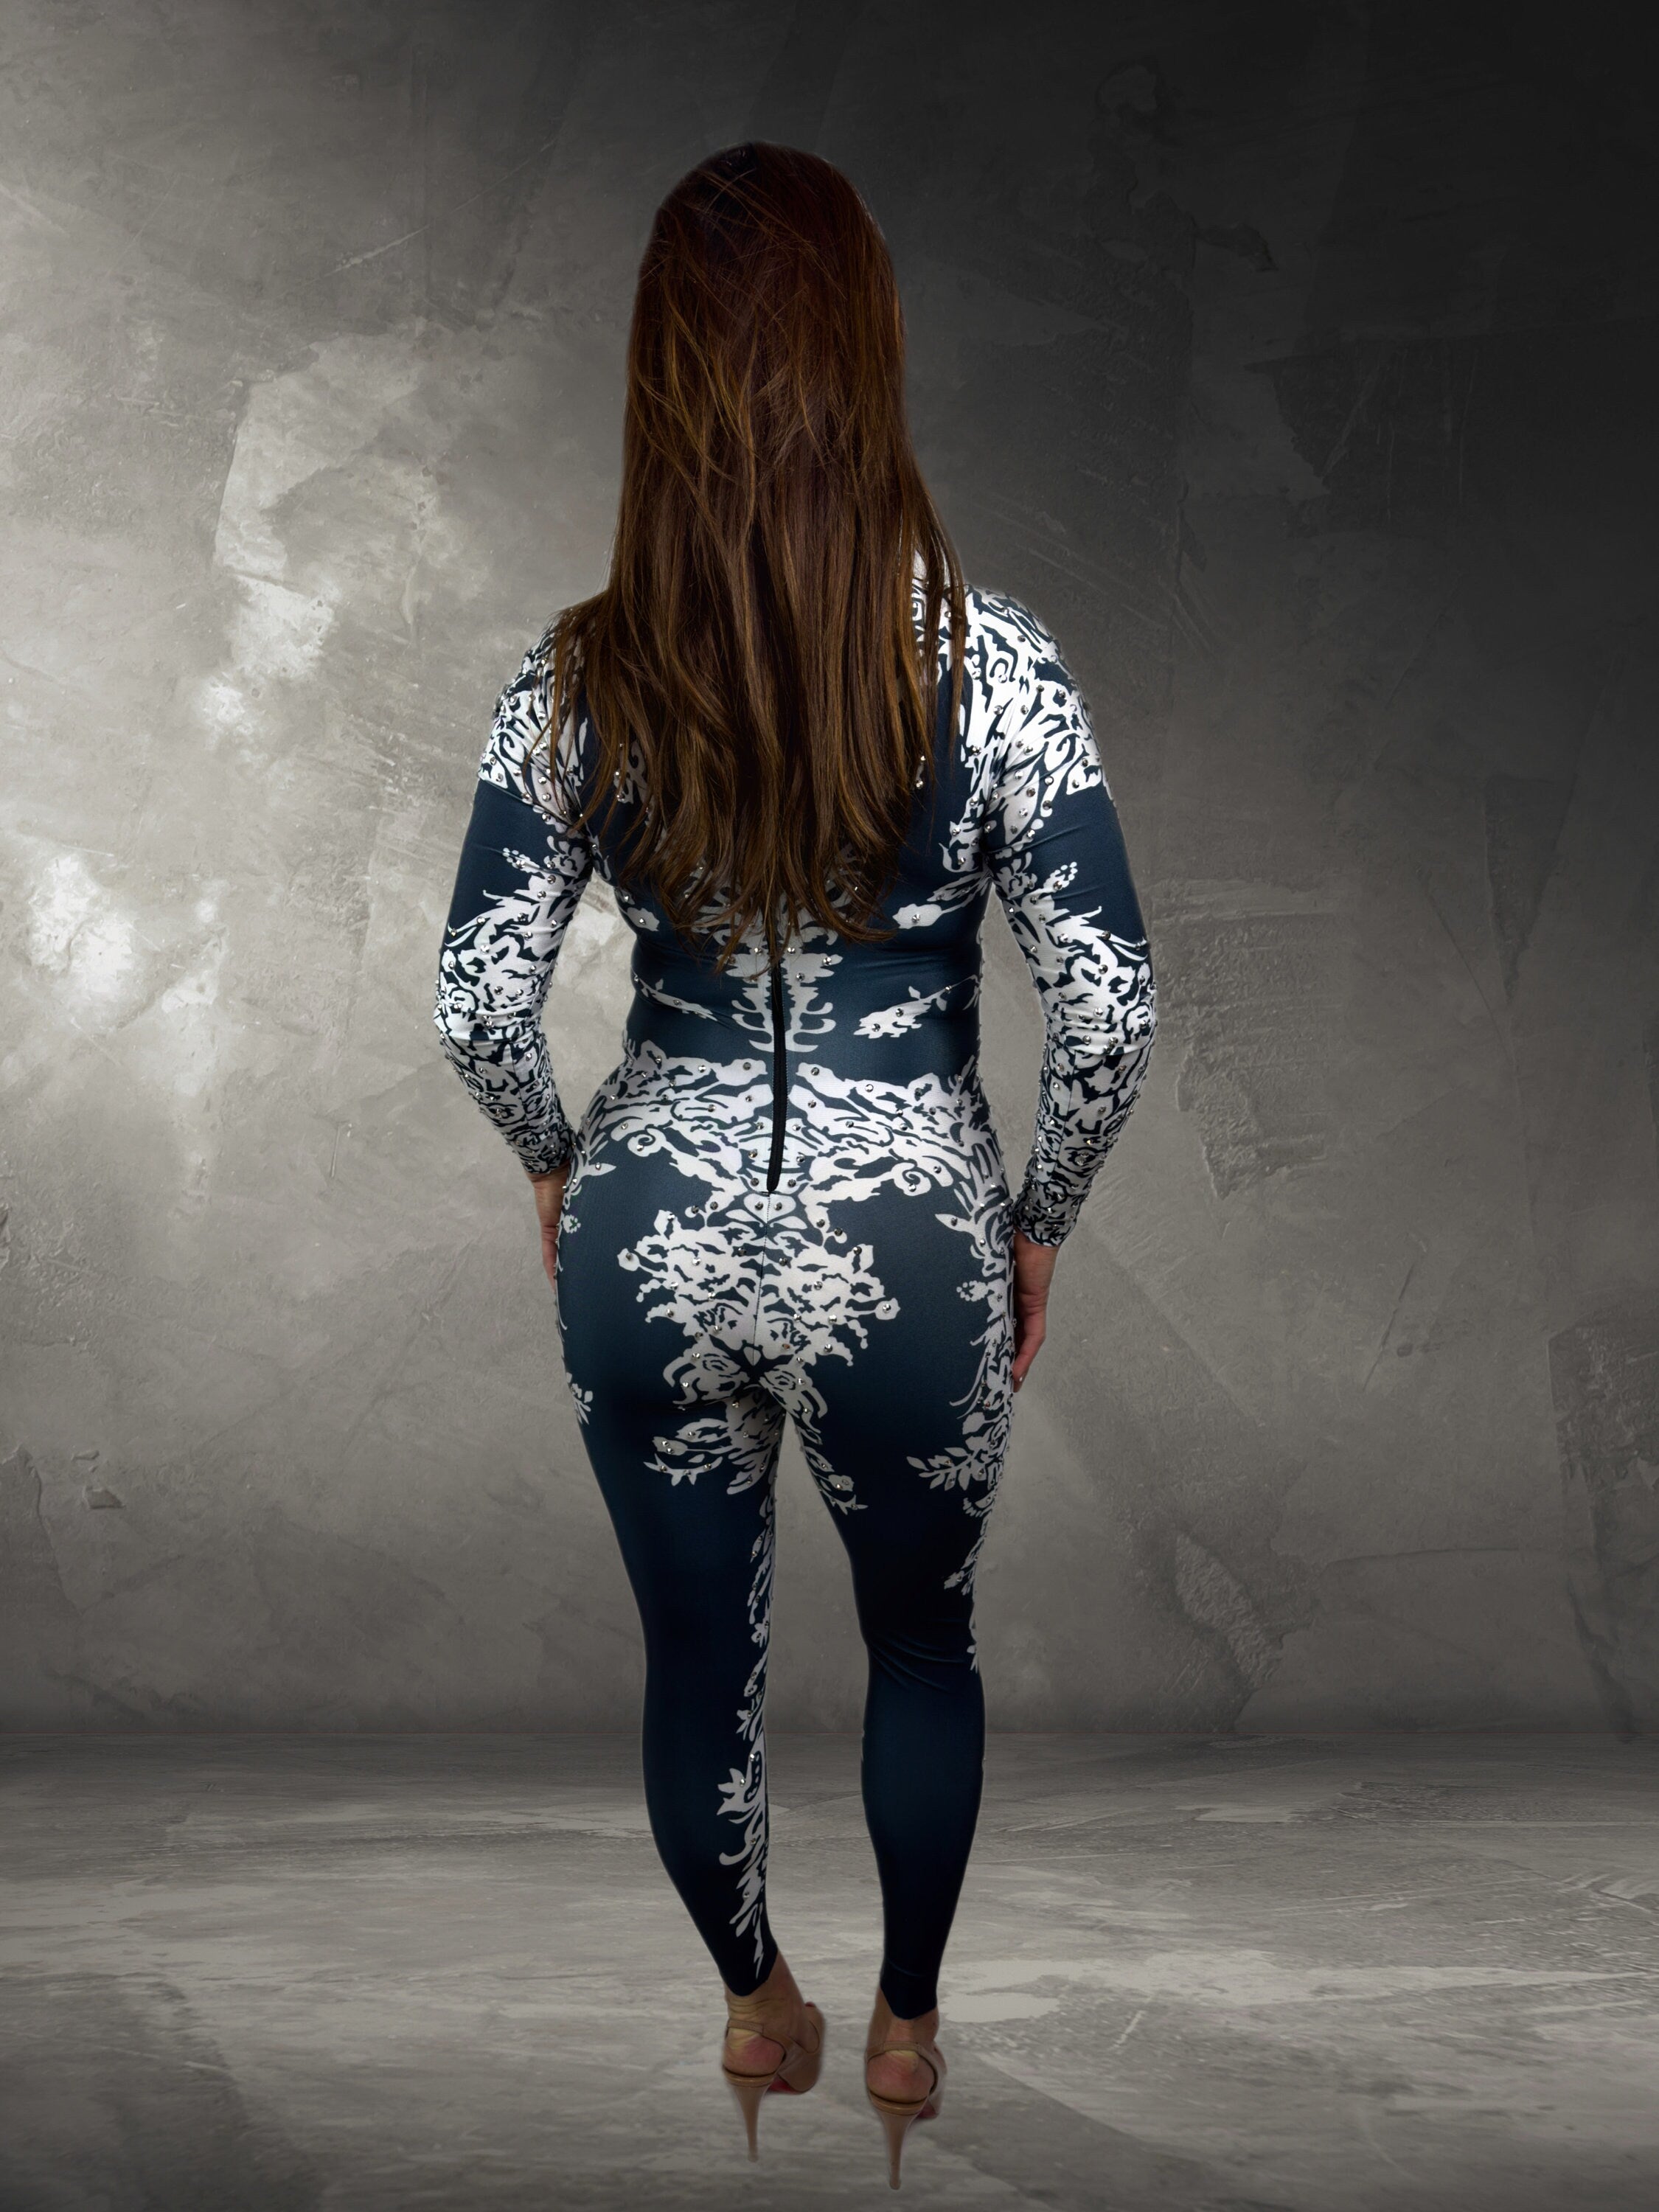 Deta Von Rhinestone Bodysuit / Black & White Diamond Catsuit / Crystal Festival Outfit / NYE Party Dress Burning Man Performer Costume